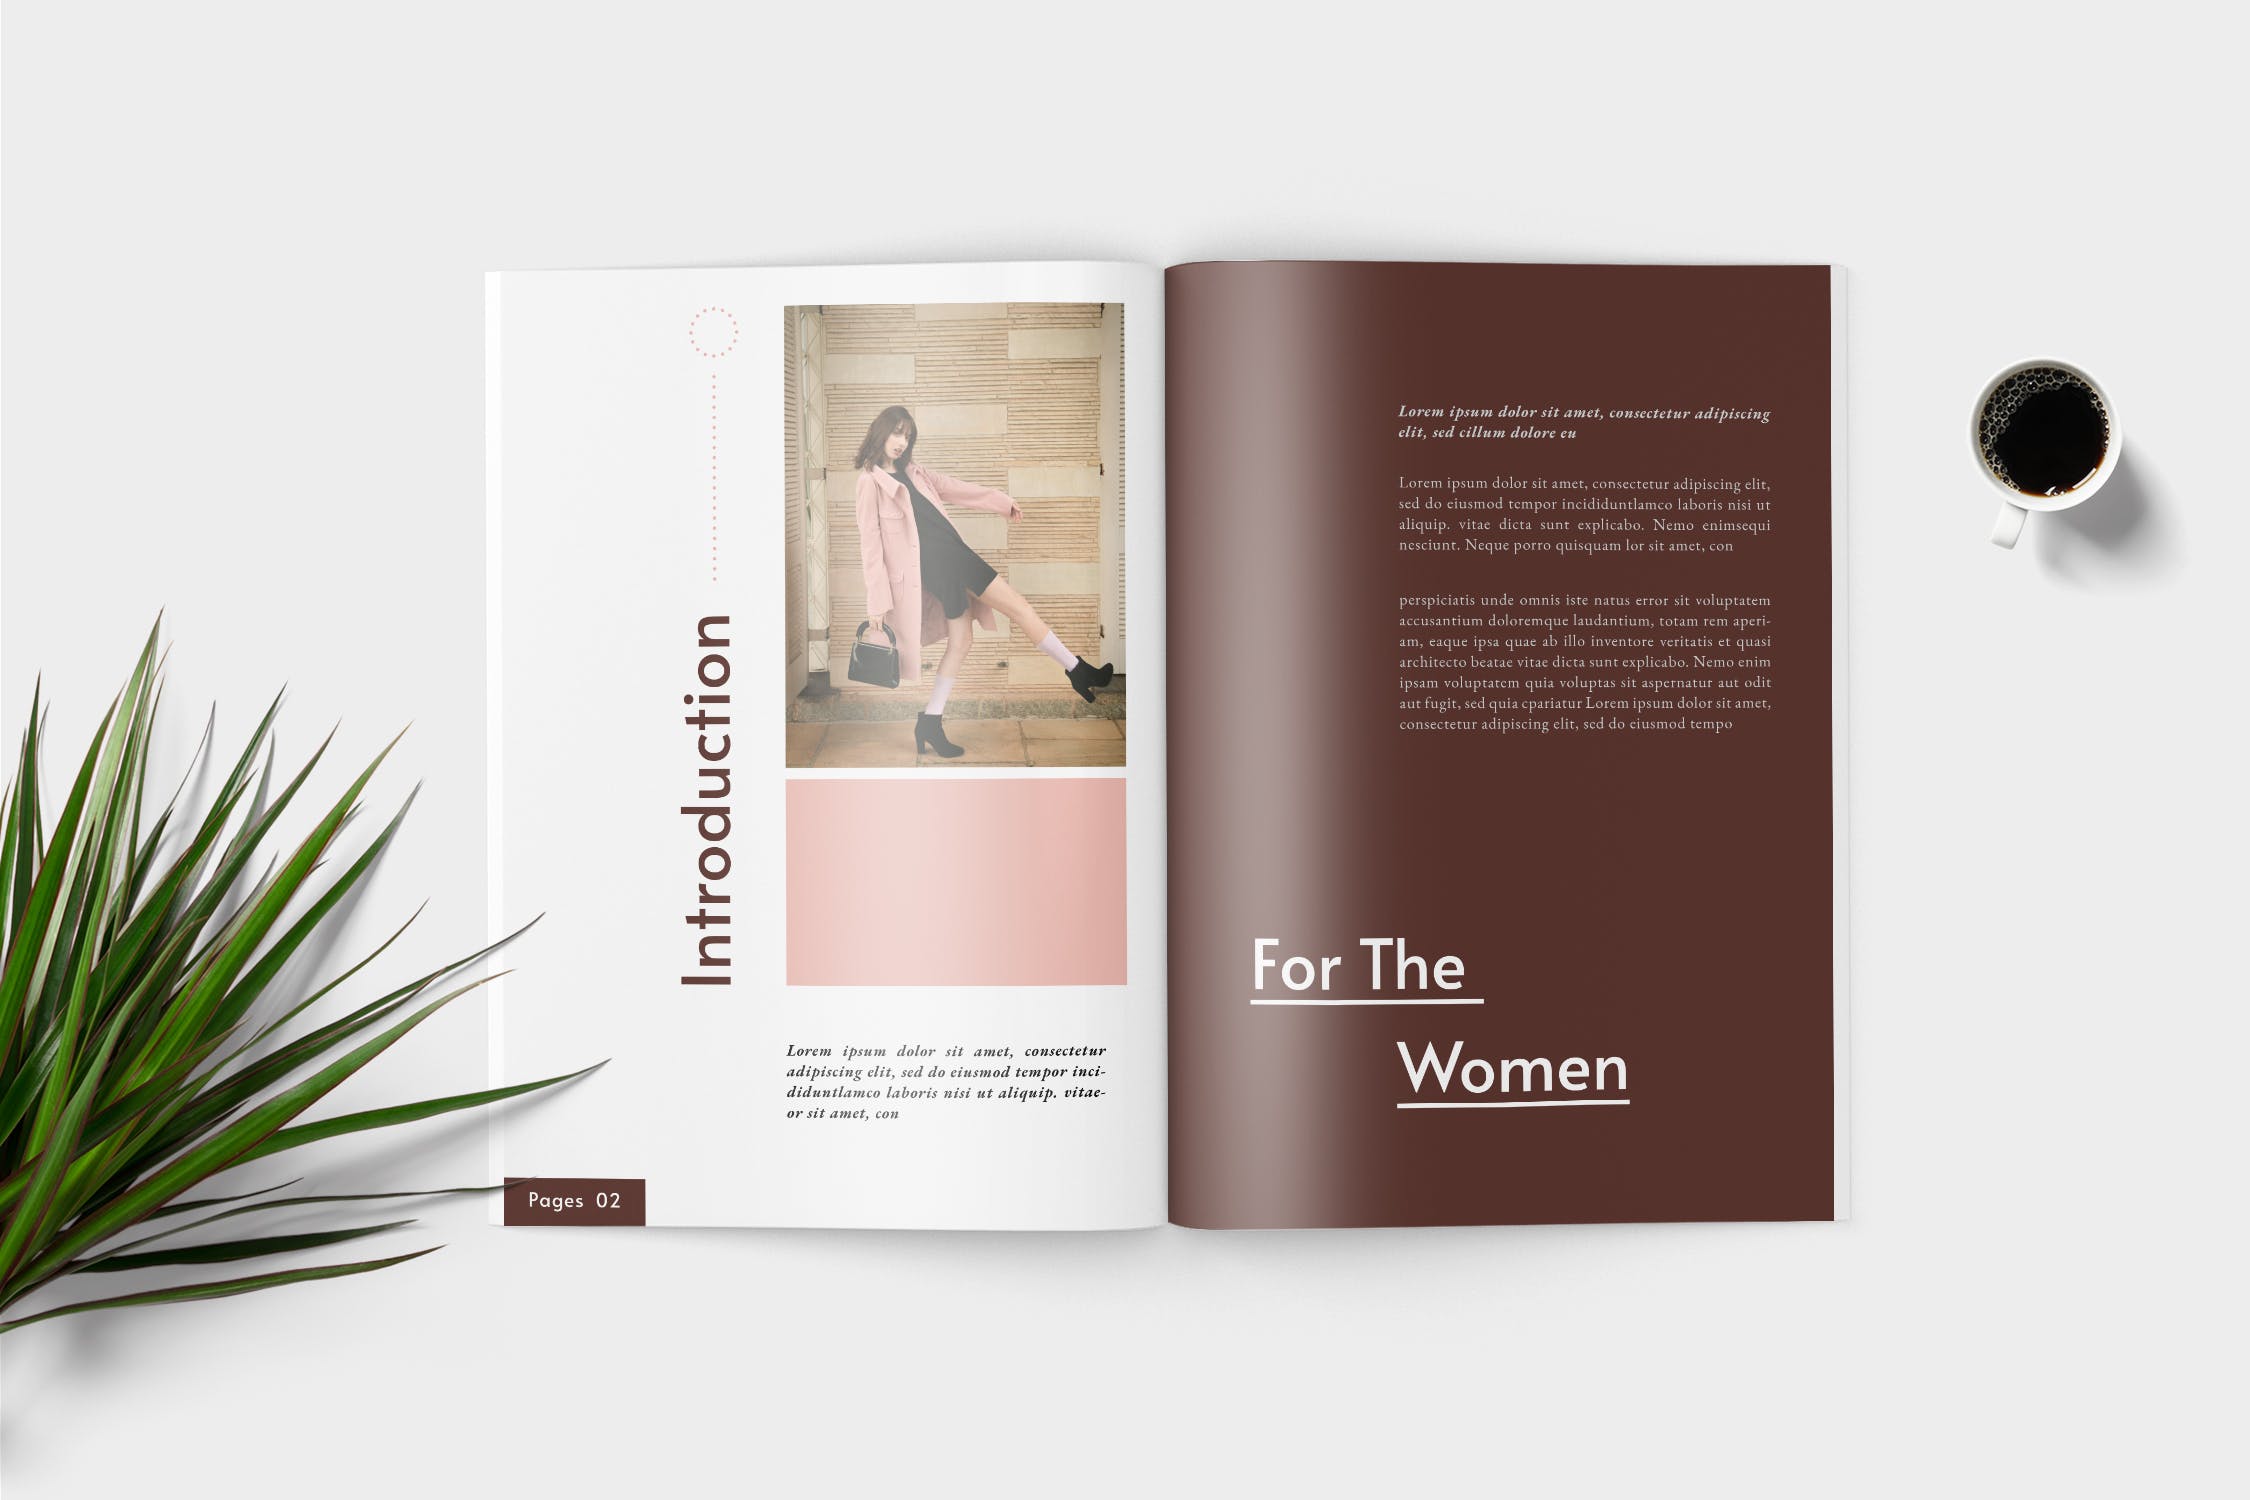 时装产品素材库精选目录设计模板 Elana Fashion Lookbook Catalogue插图(2)